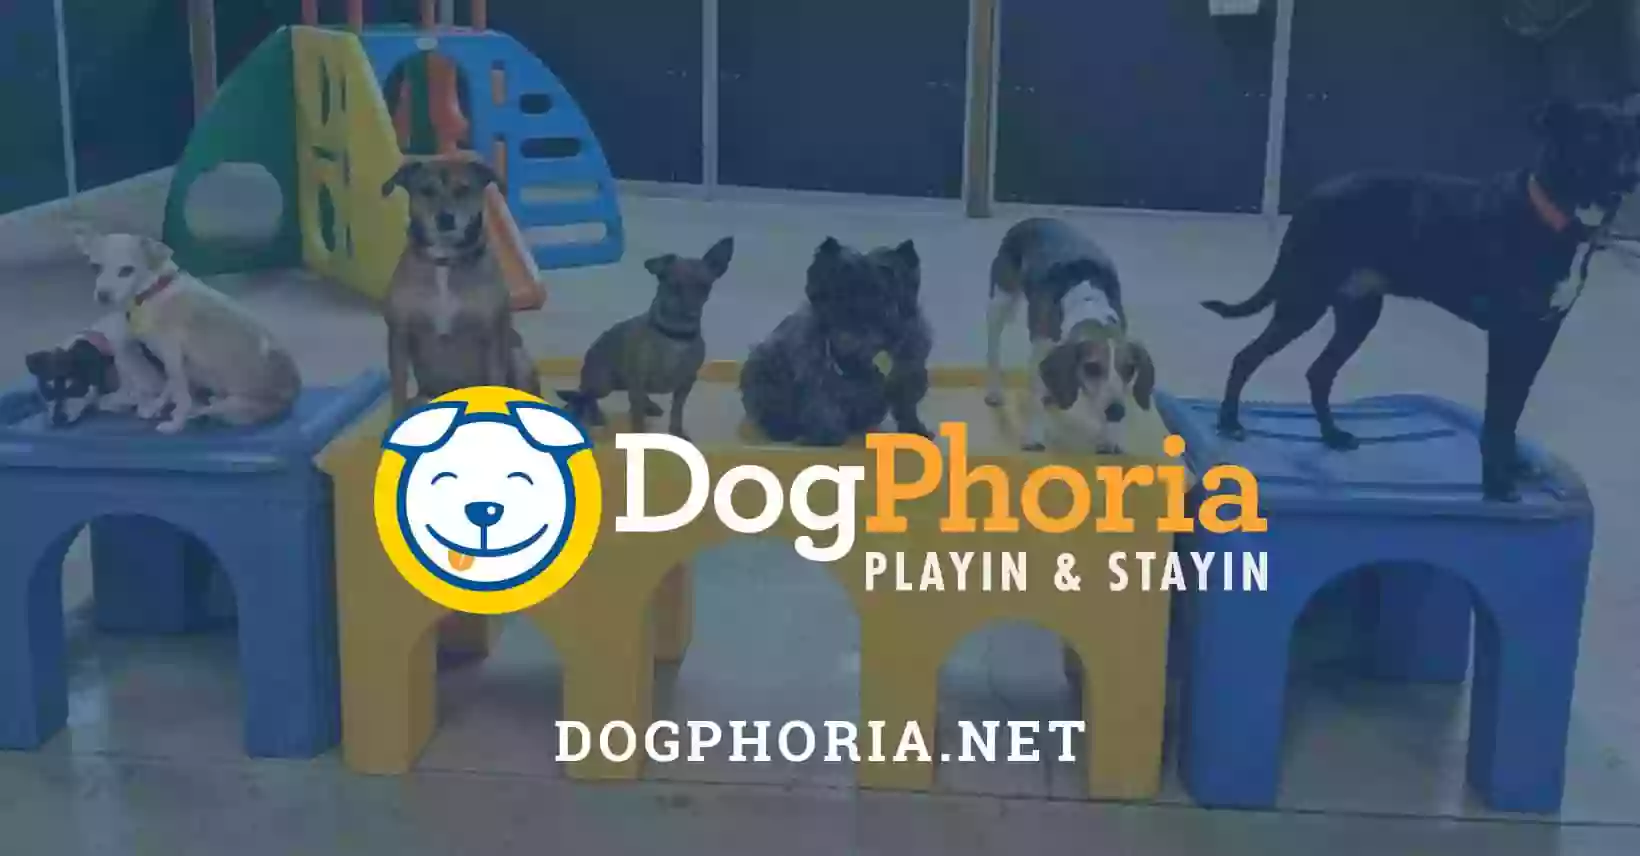 DogPhoria